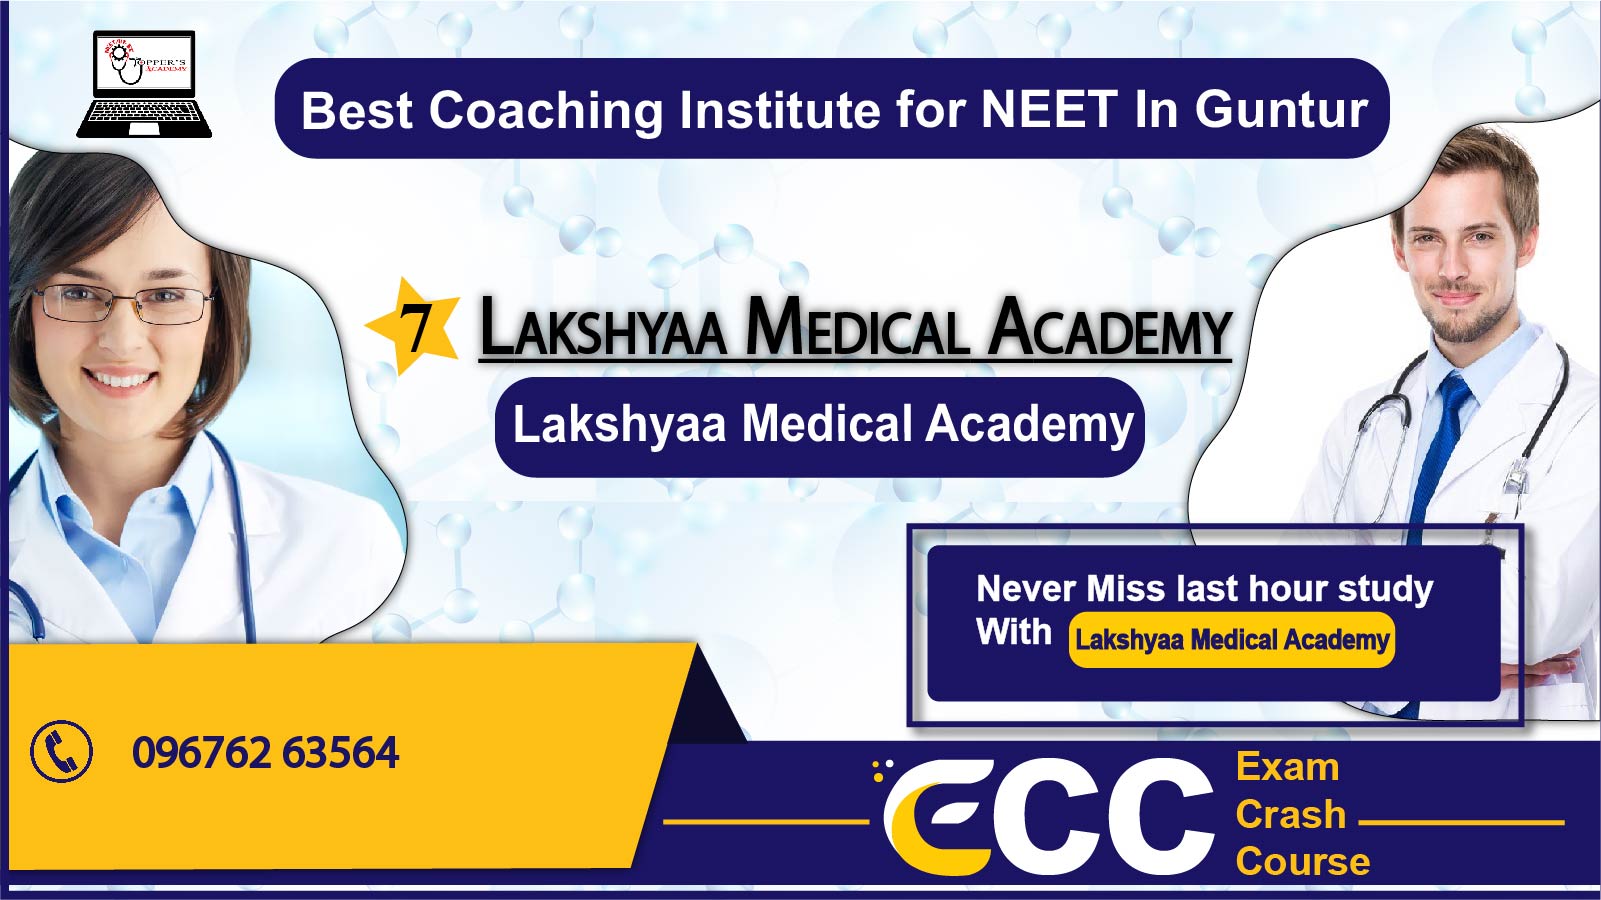  Lakshyaa Medical Academy NEET Coaching in Guntur